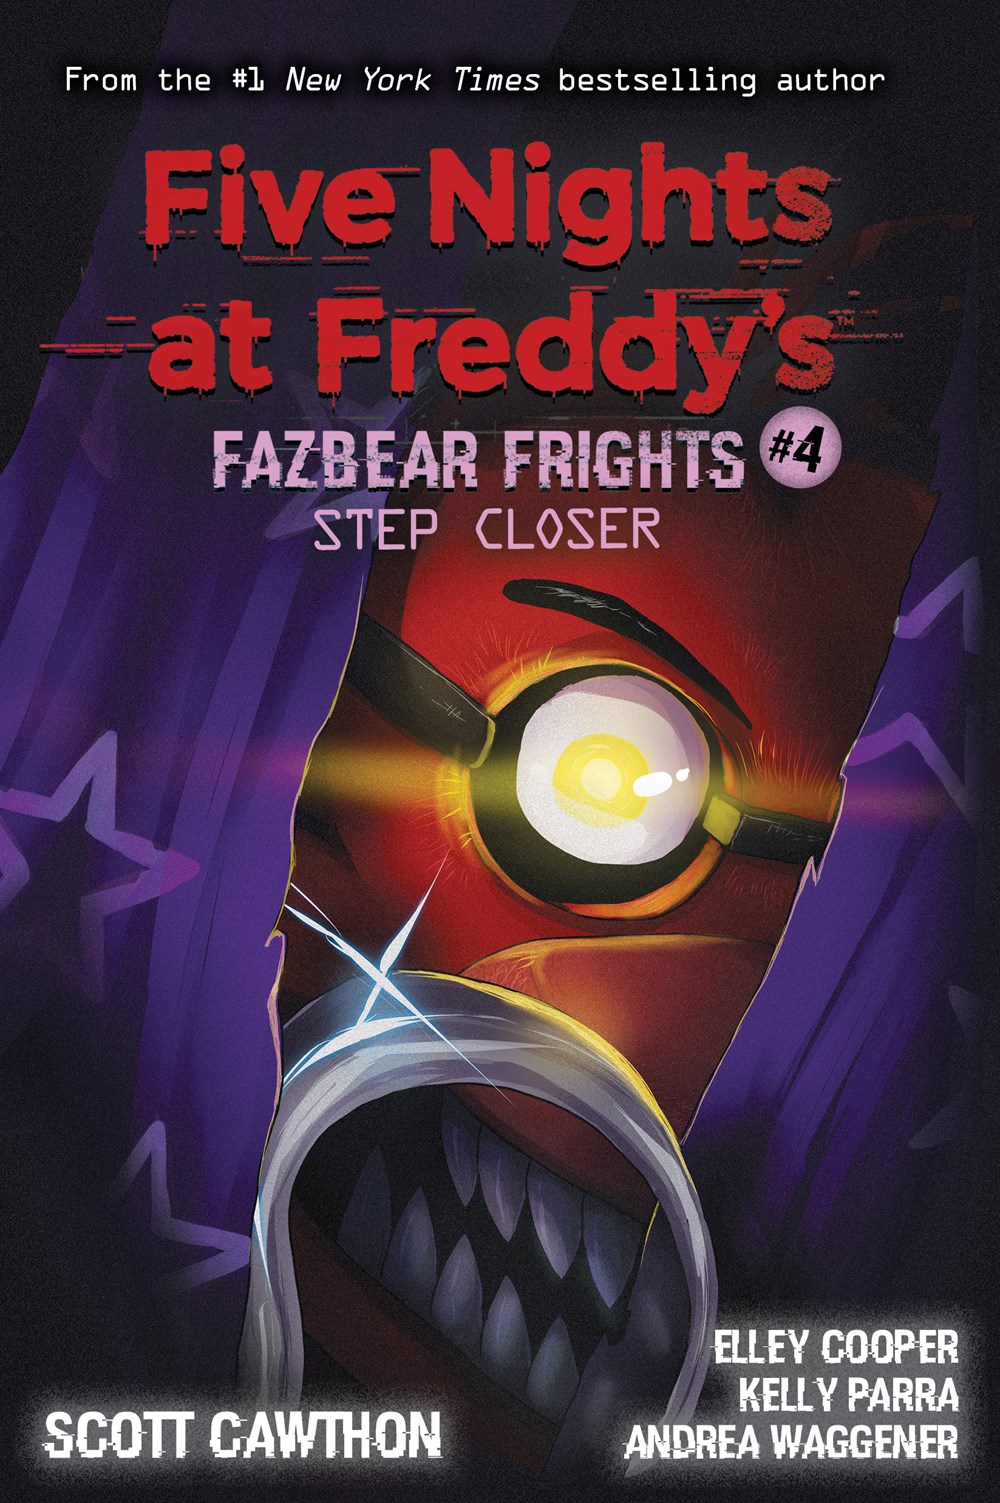 How to Draw Freddy Fazbear, Five Nights at Freddys, Step by Step